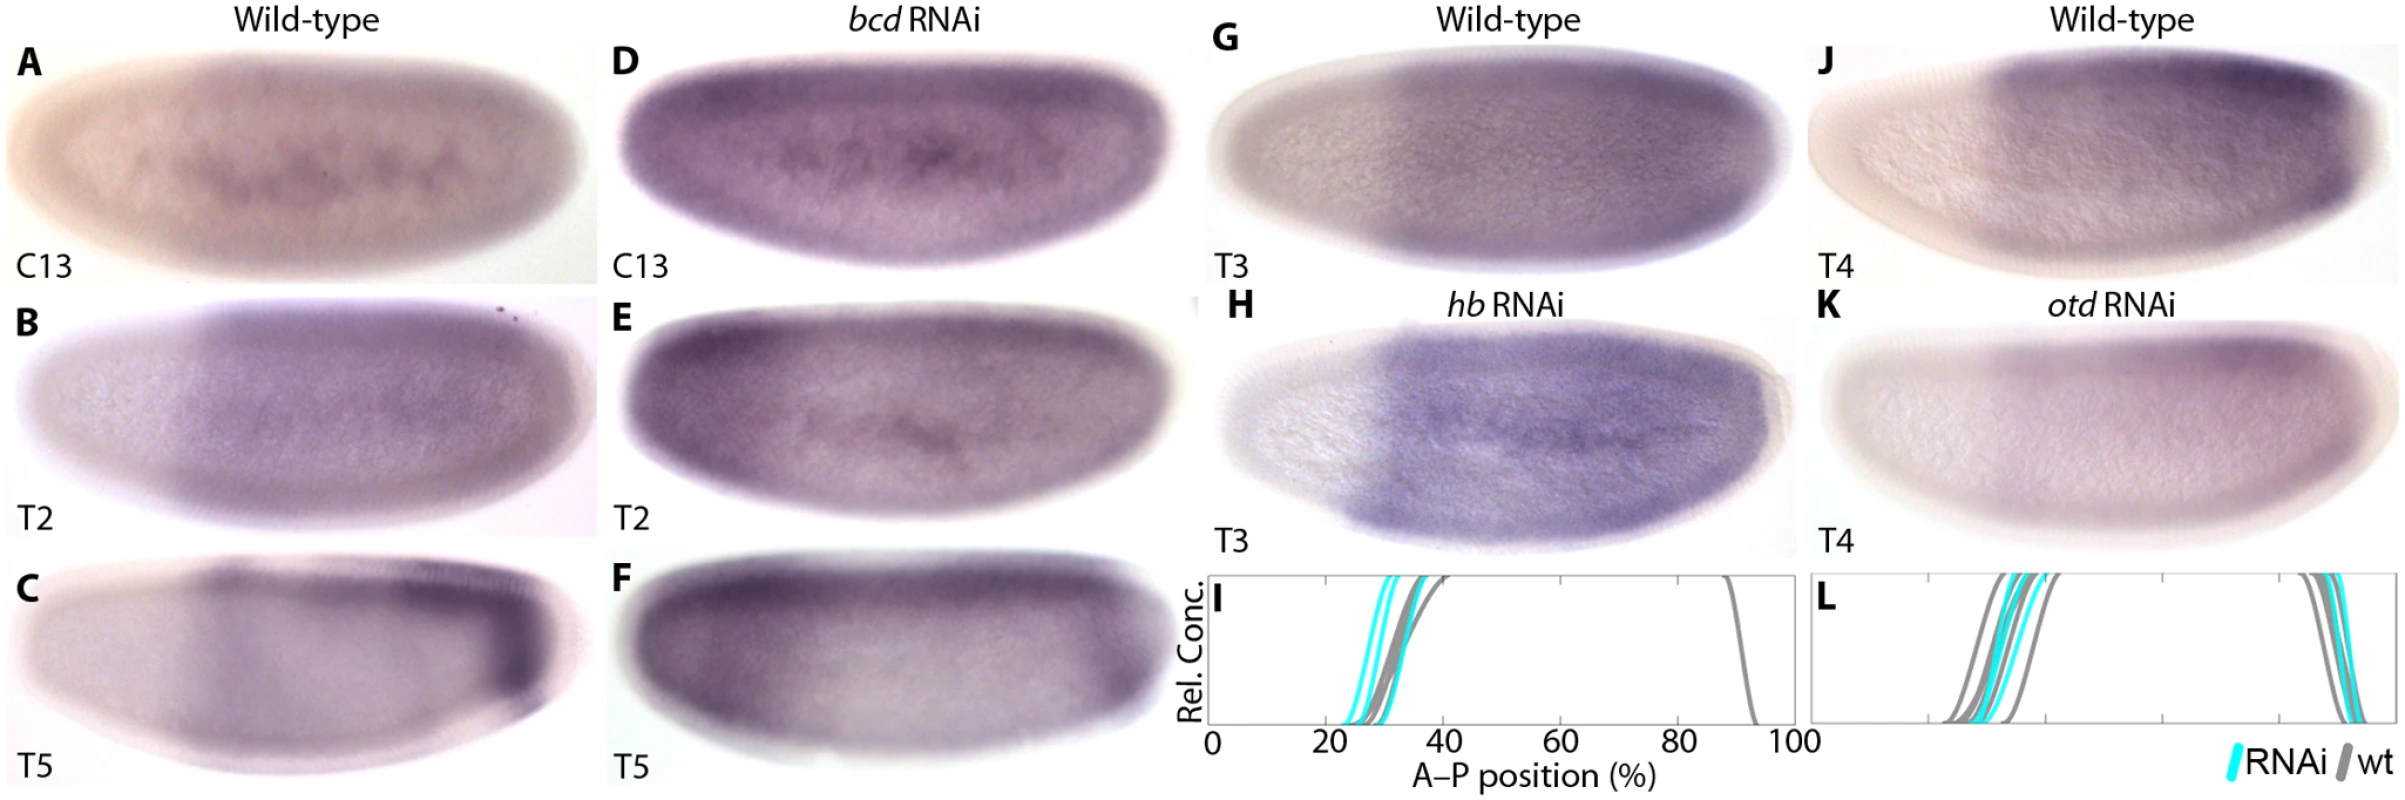 Zygotic <i>cad</i> mRNA expression in wild-type and RNAi-treated embryos.